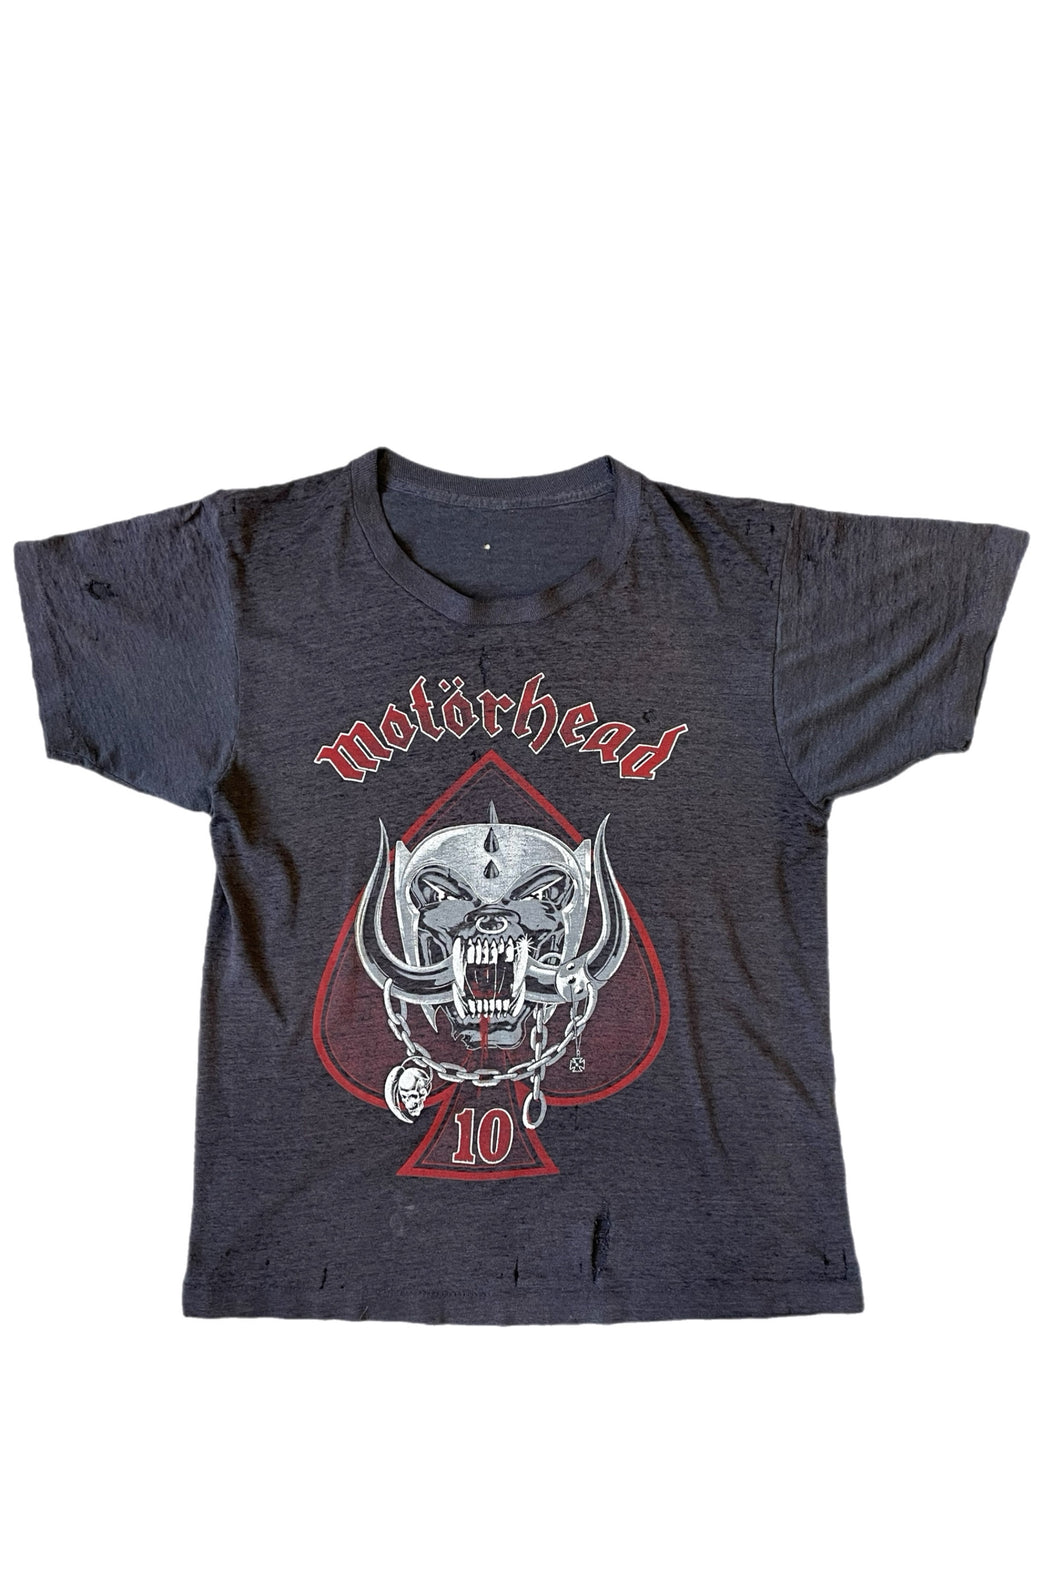 Vintage 1985 Motorhead Distressed Tour T-Shirt